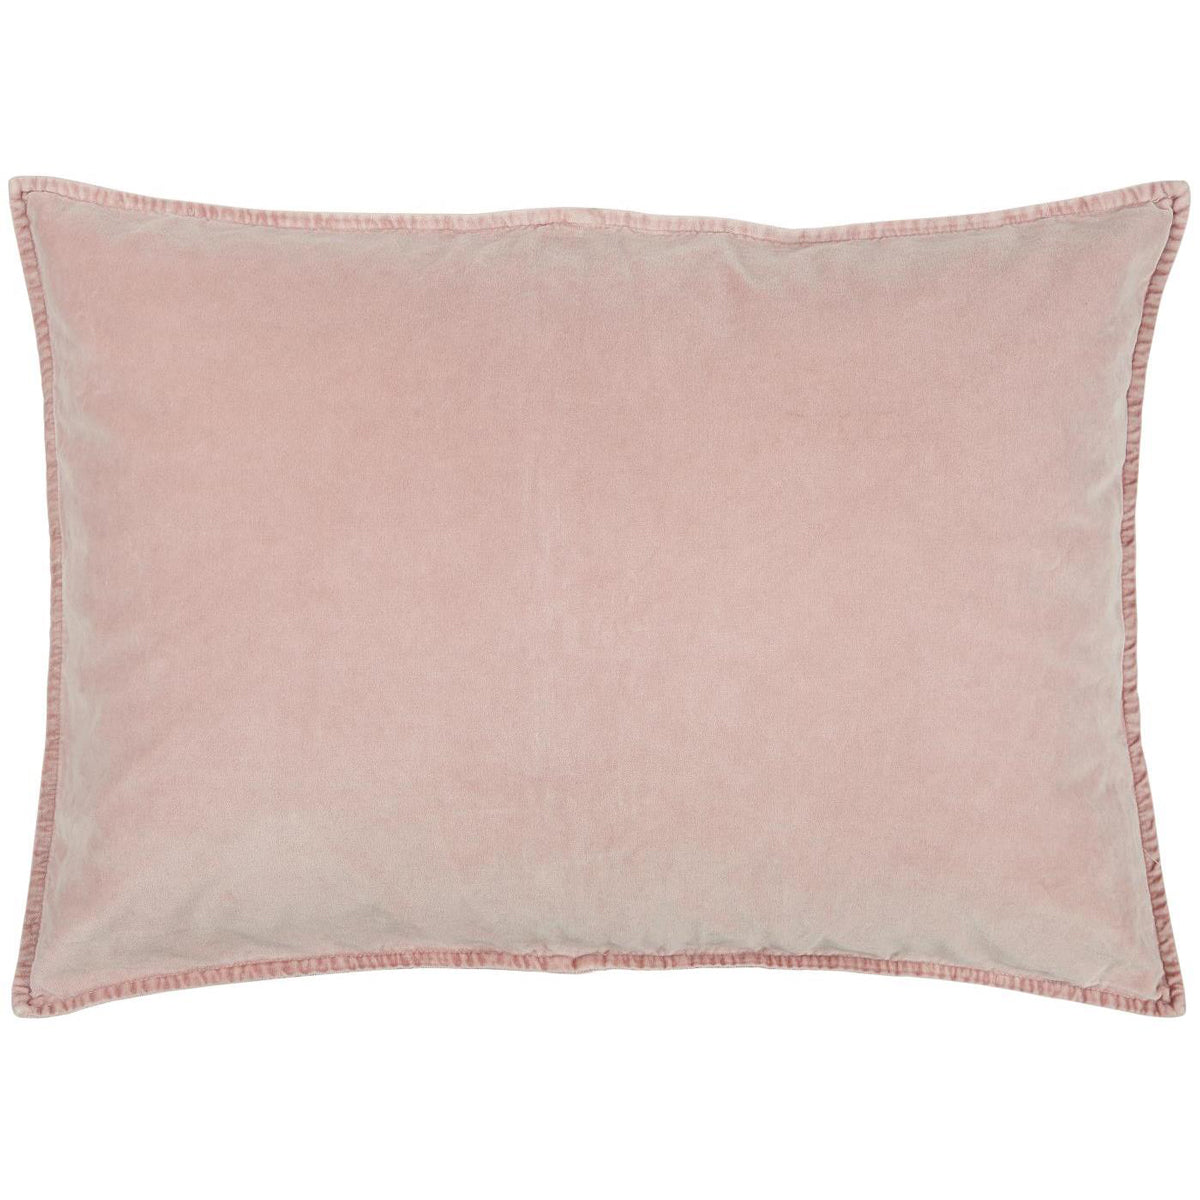 Cushion Velvet - Rose Shadow 50 x 70cm